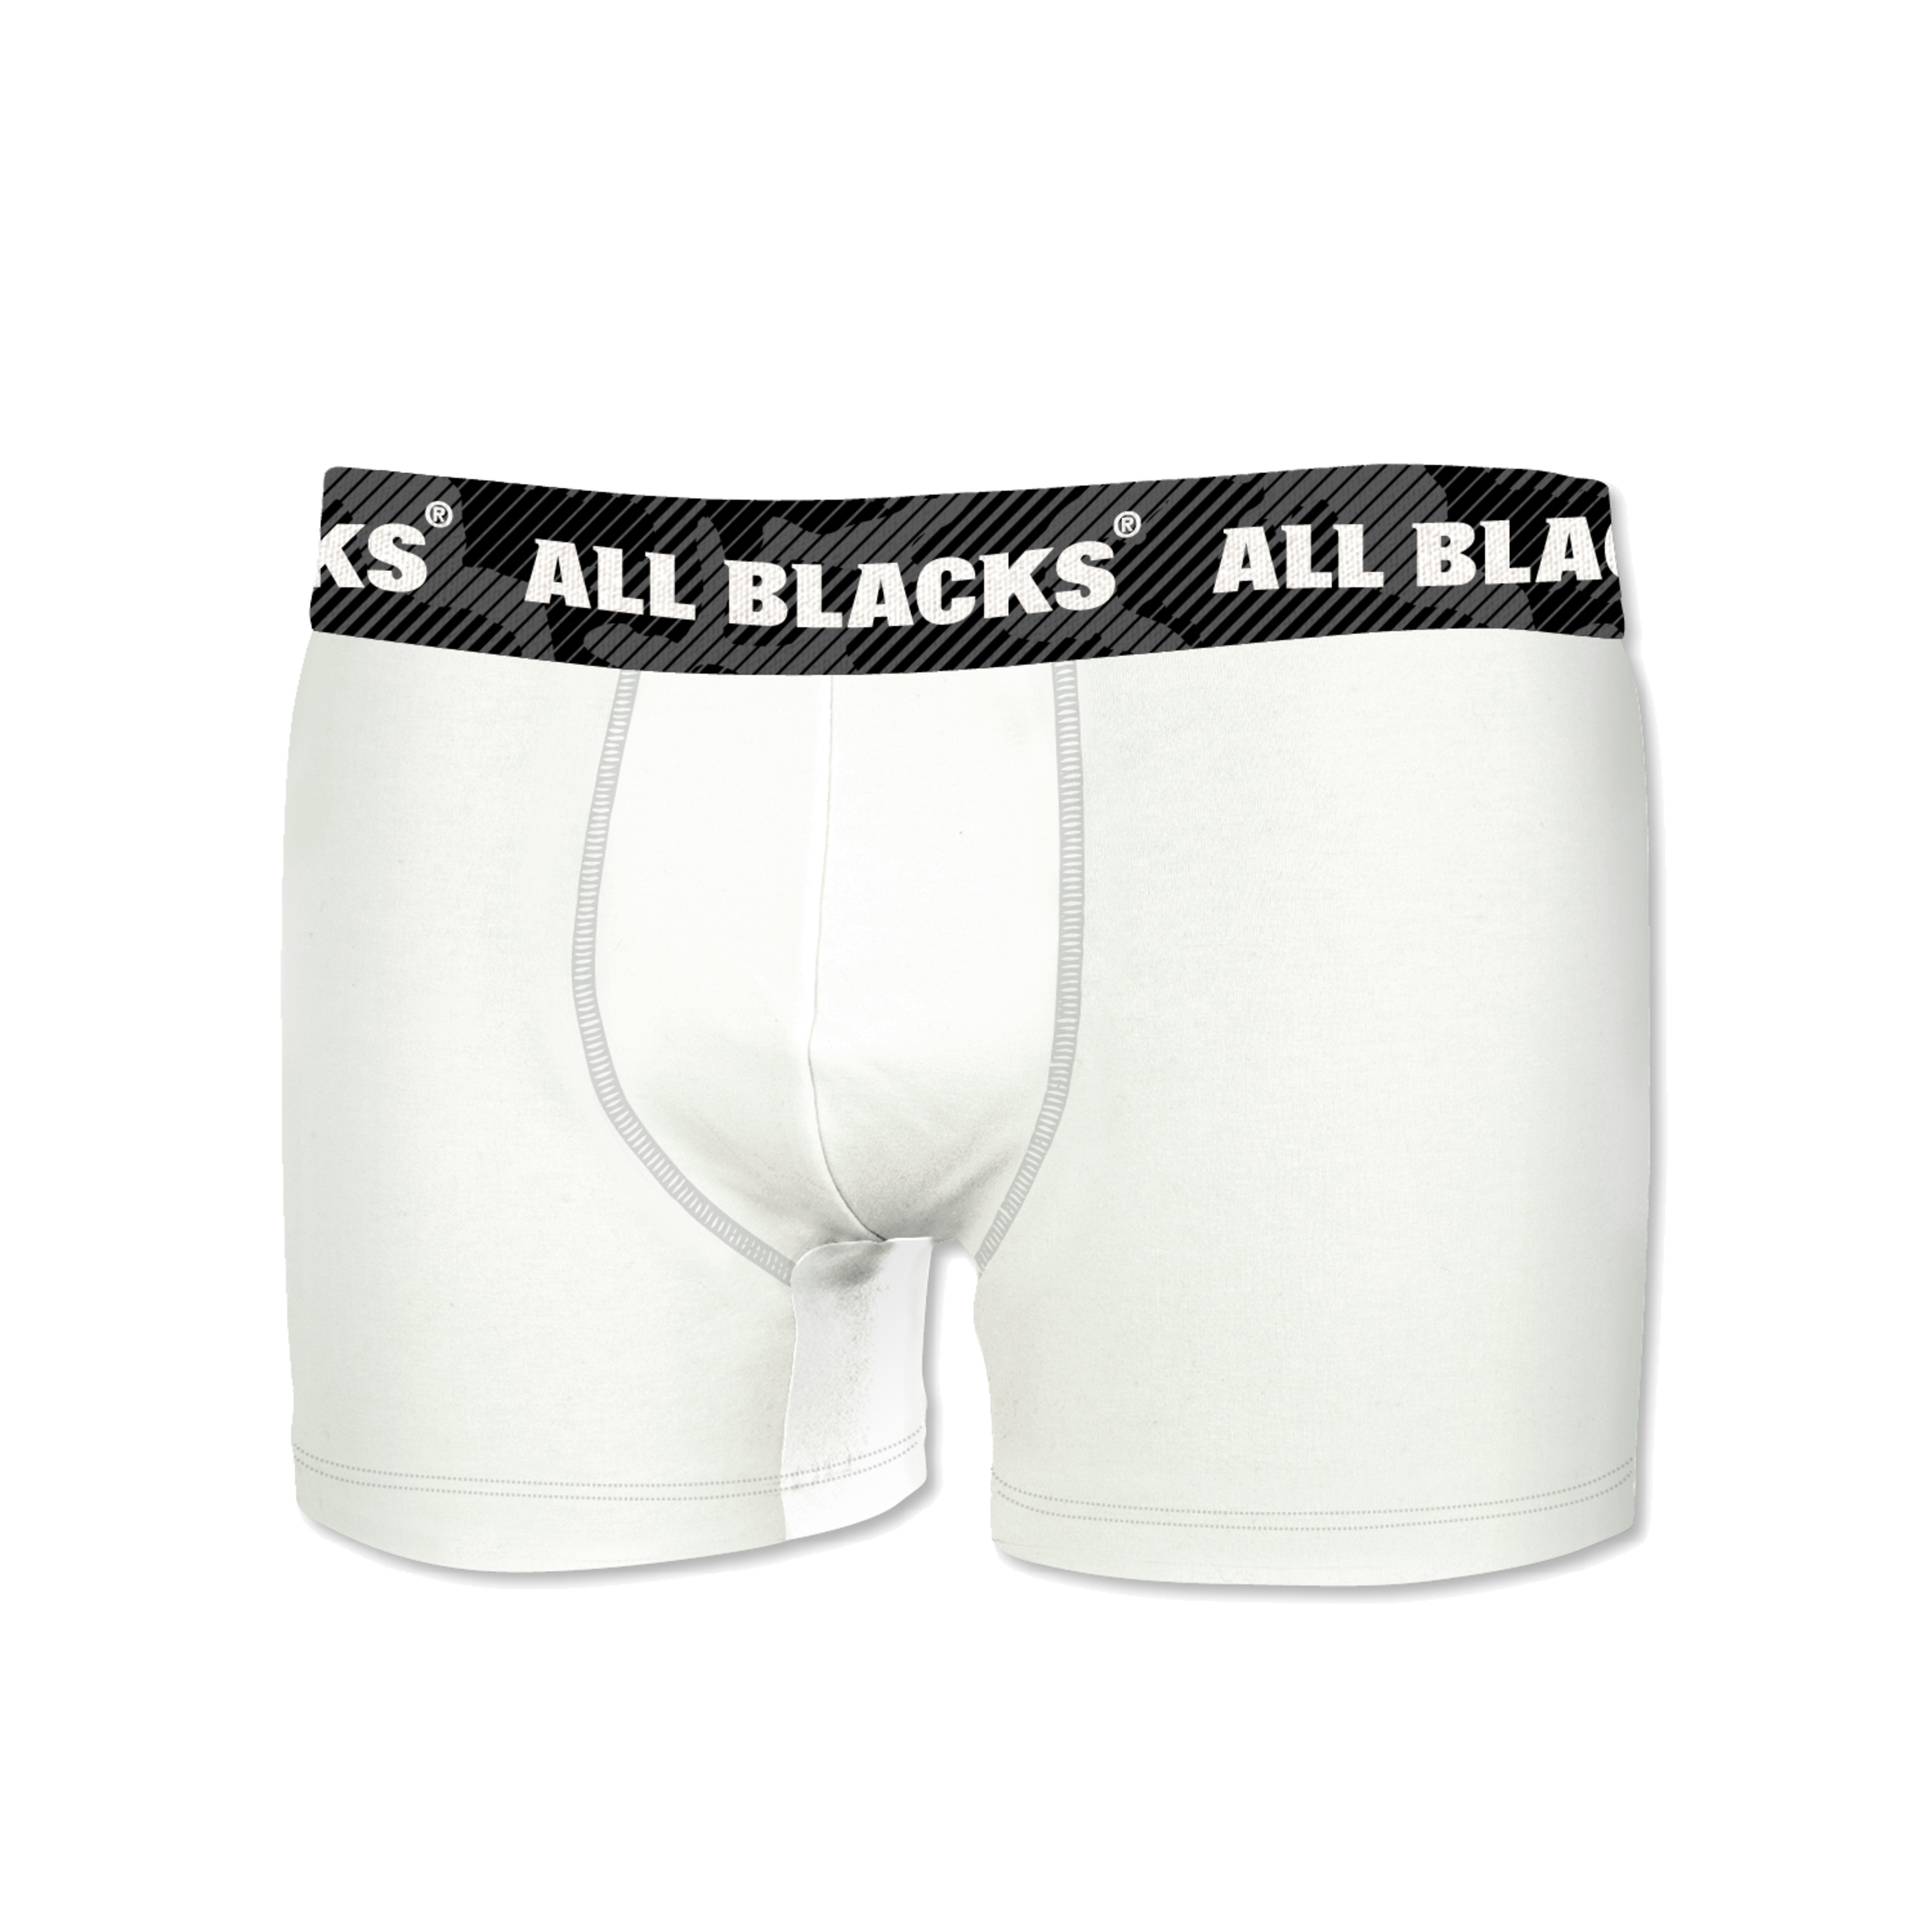 Cuecas All Blacks - blanco - 